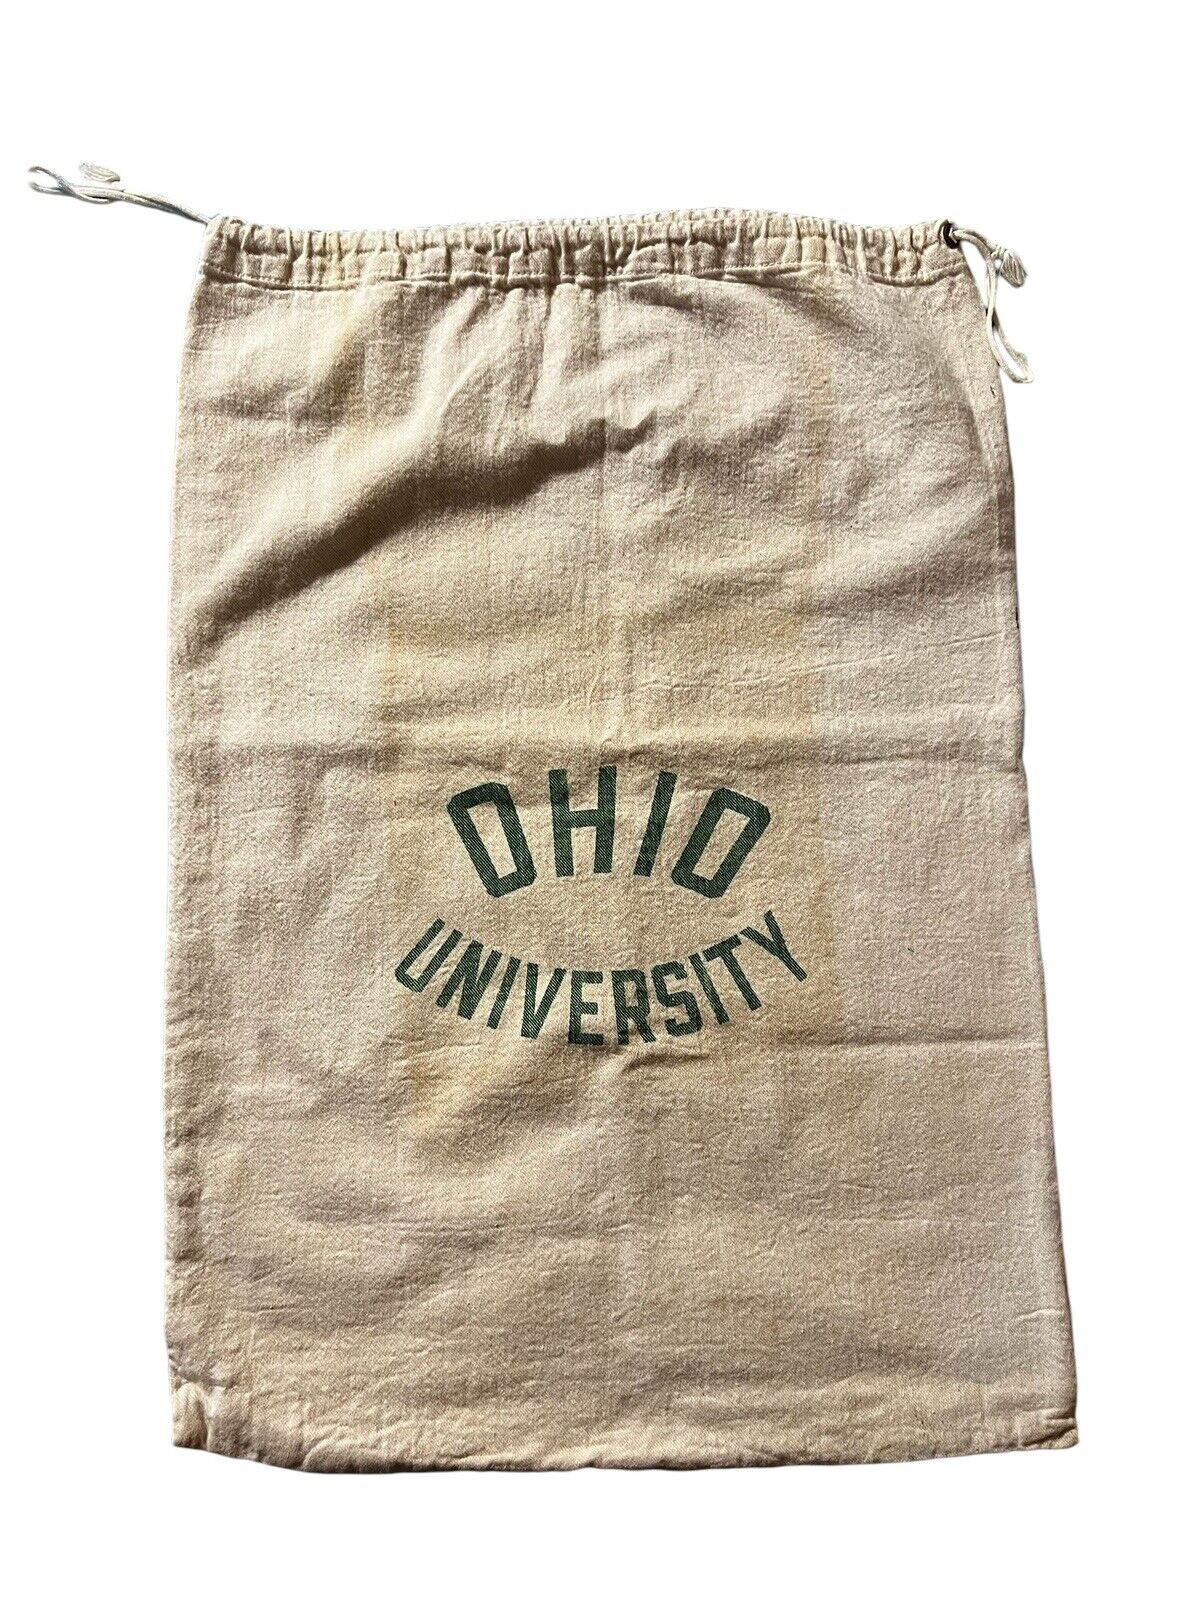 Vintage Drawstring Laundry Bag OHIO UNIVERSITY Athens OH dorm supplies furniture